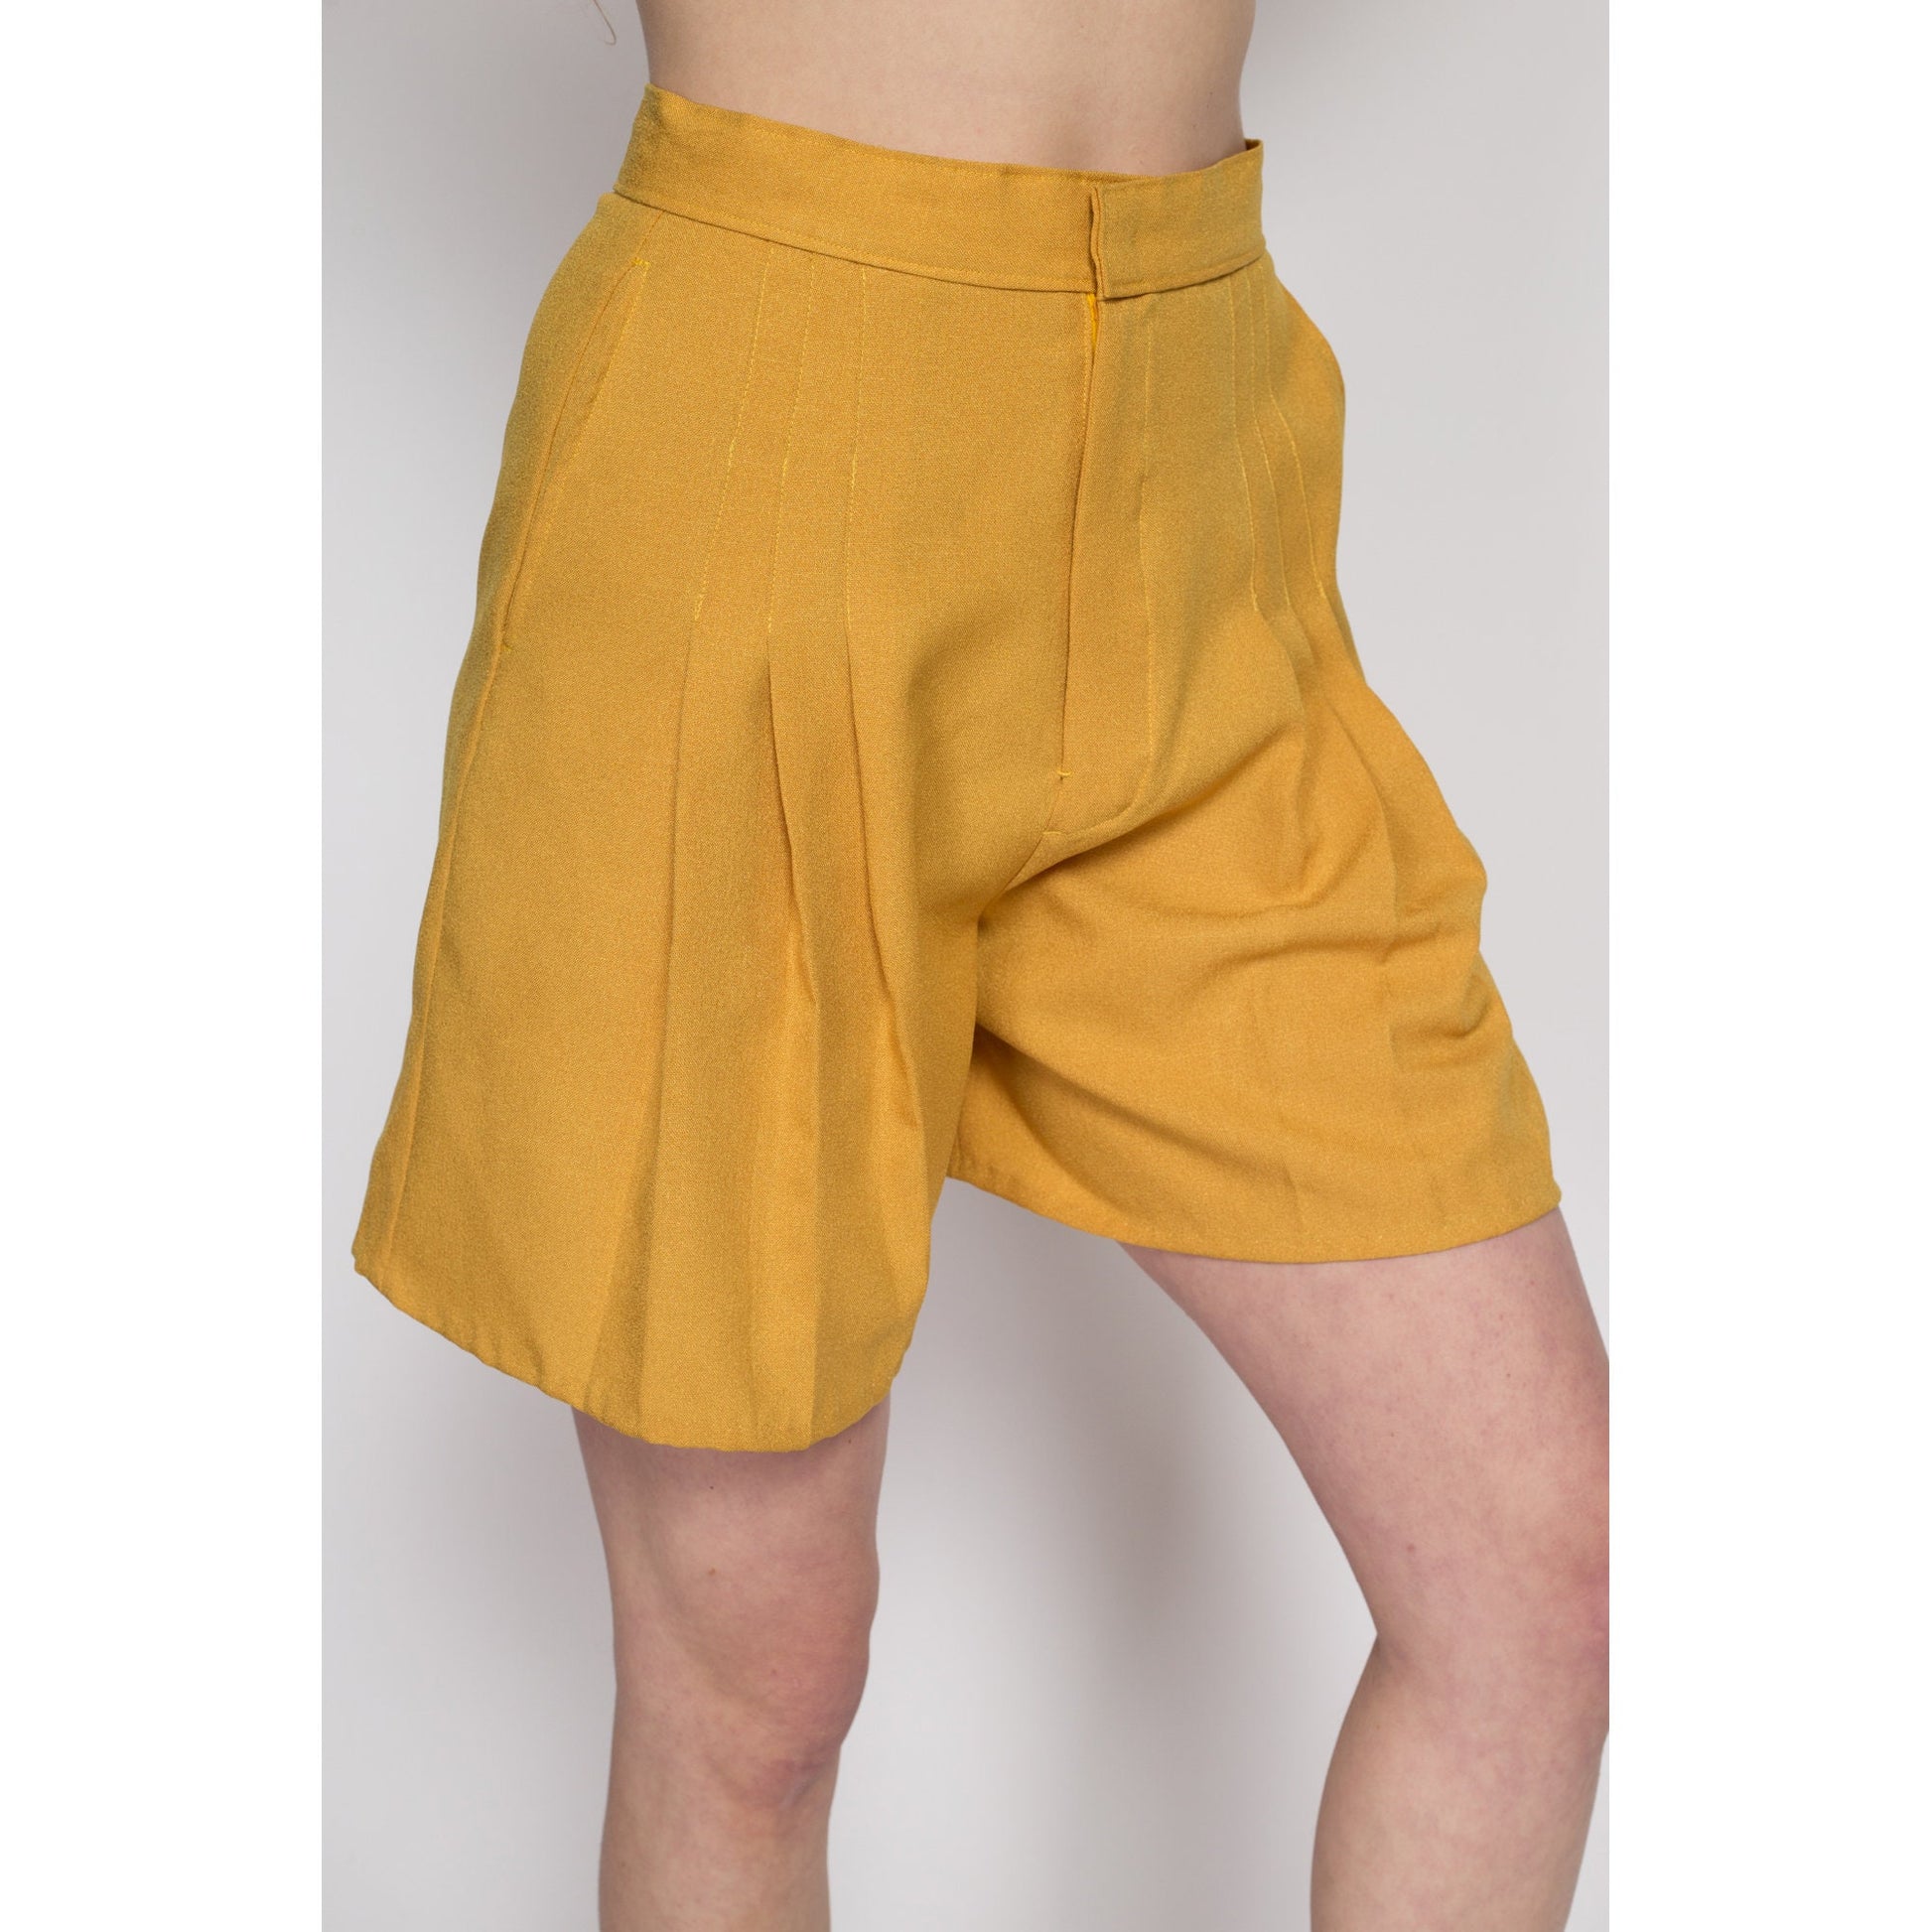 Medium 80s Mustard Yellow Pleated Shorts 28 – Flying Apple Vintage